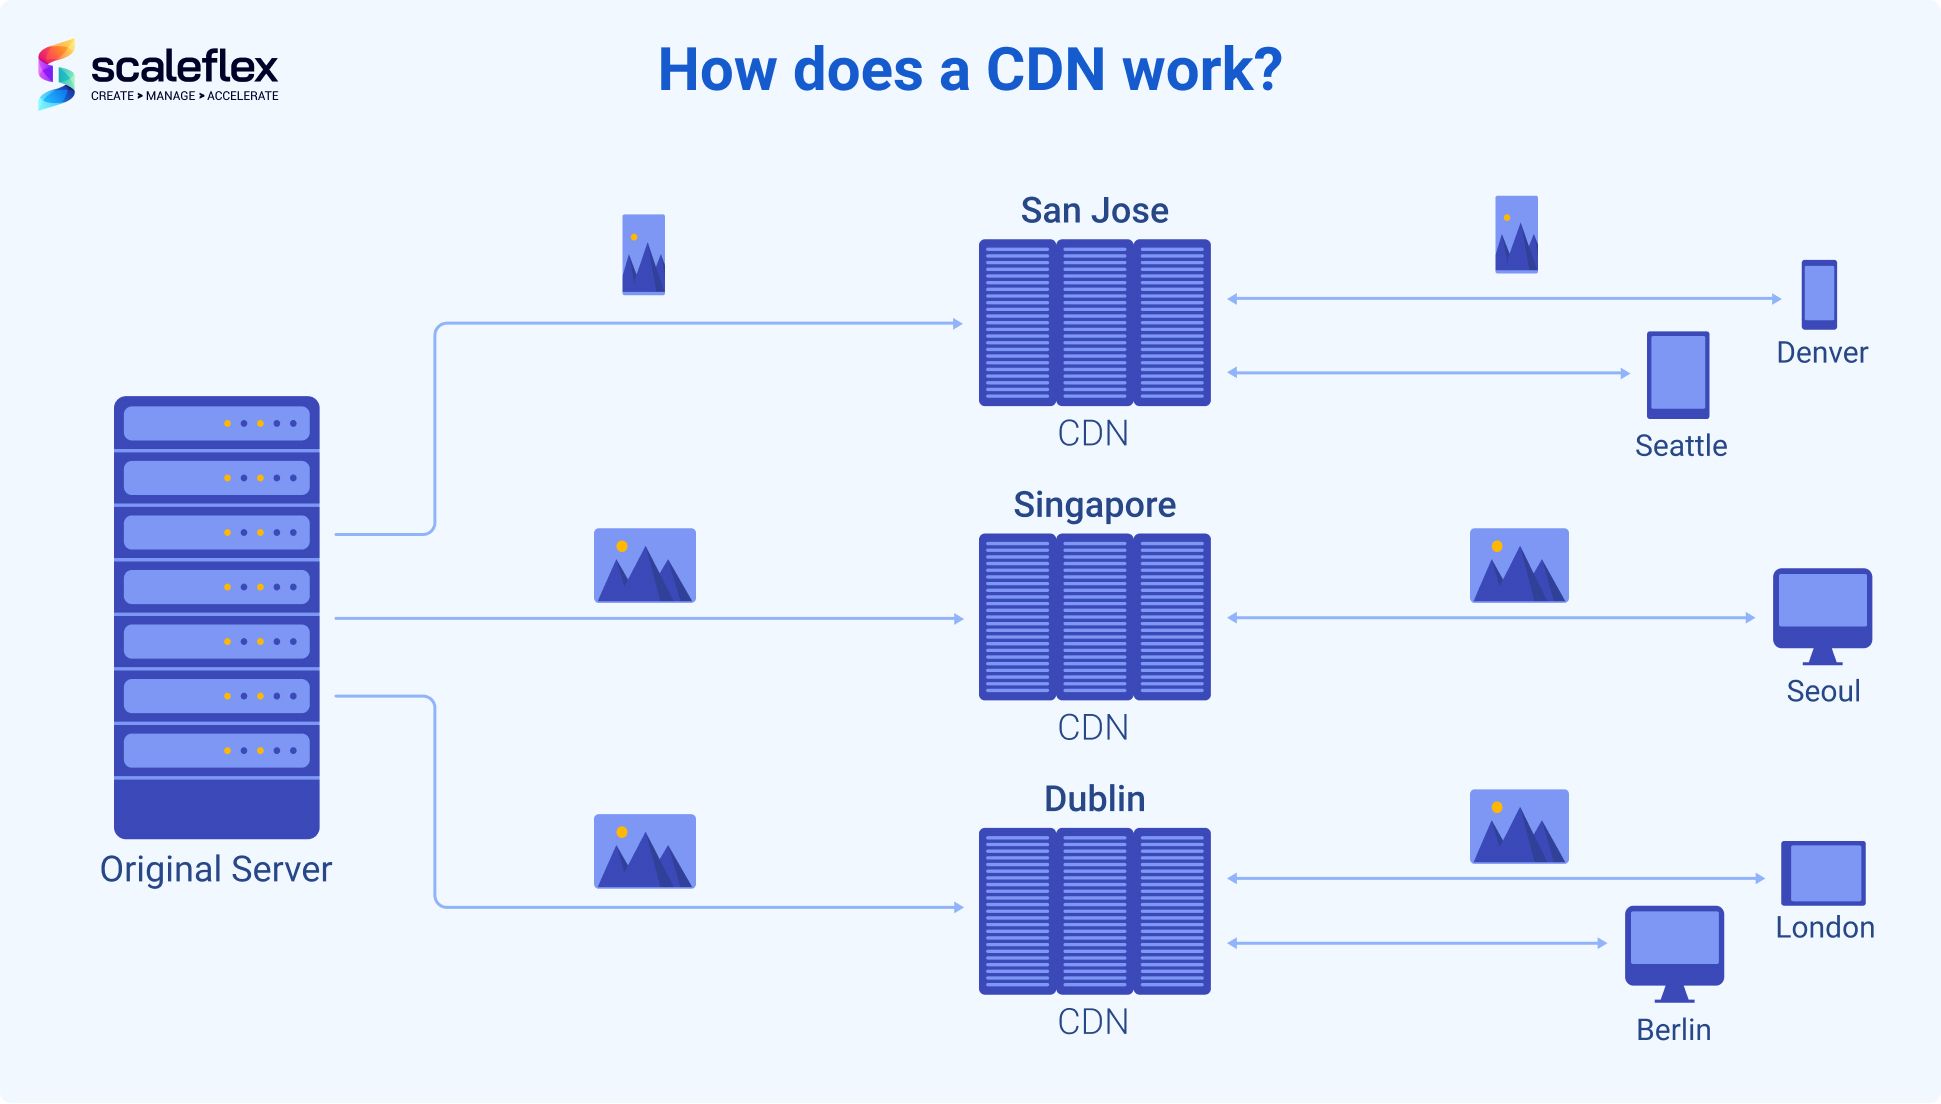 The description of how a modern CDN works